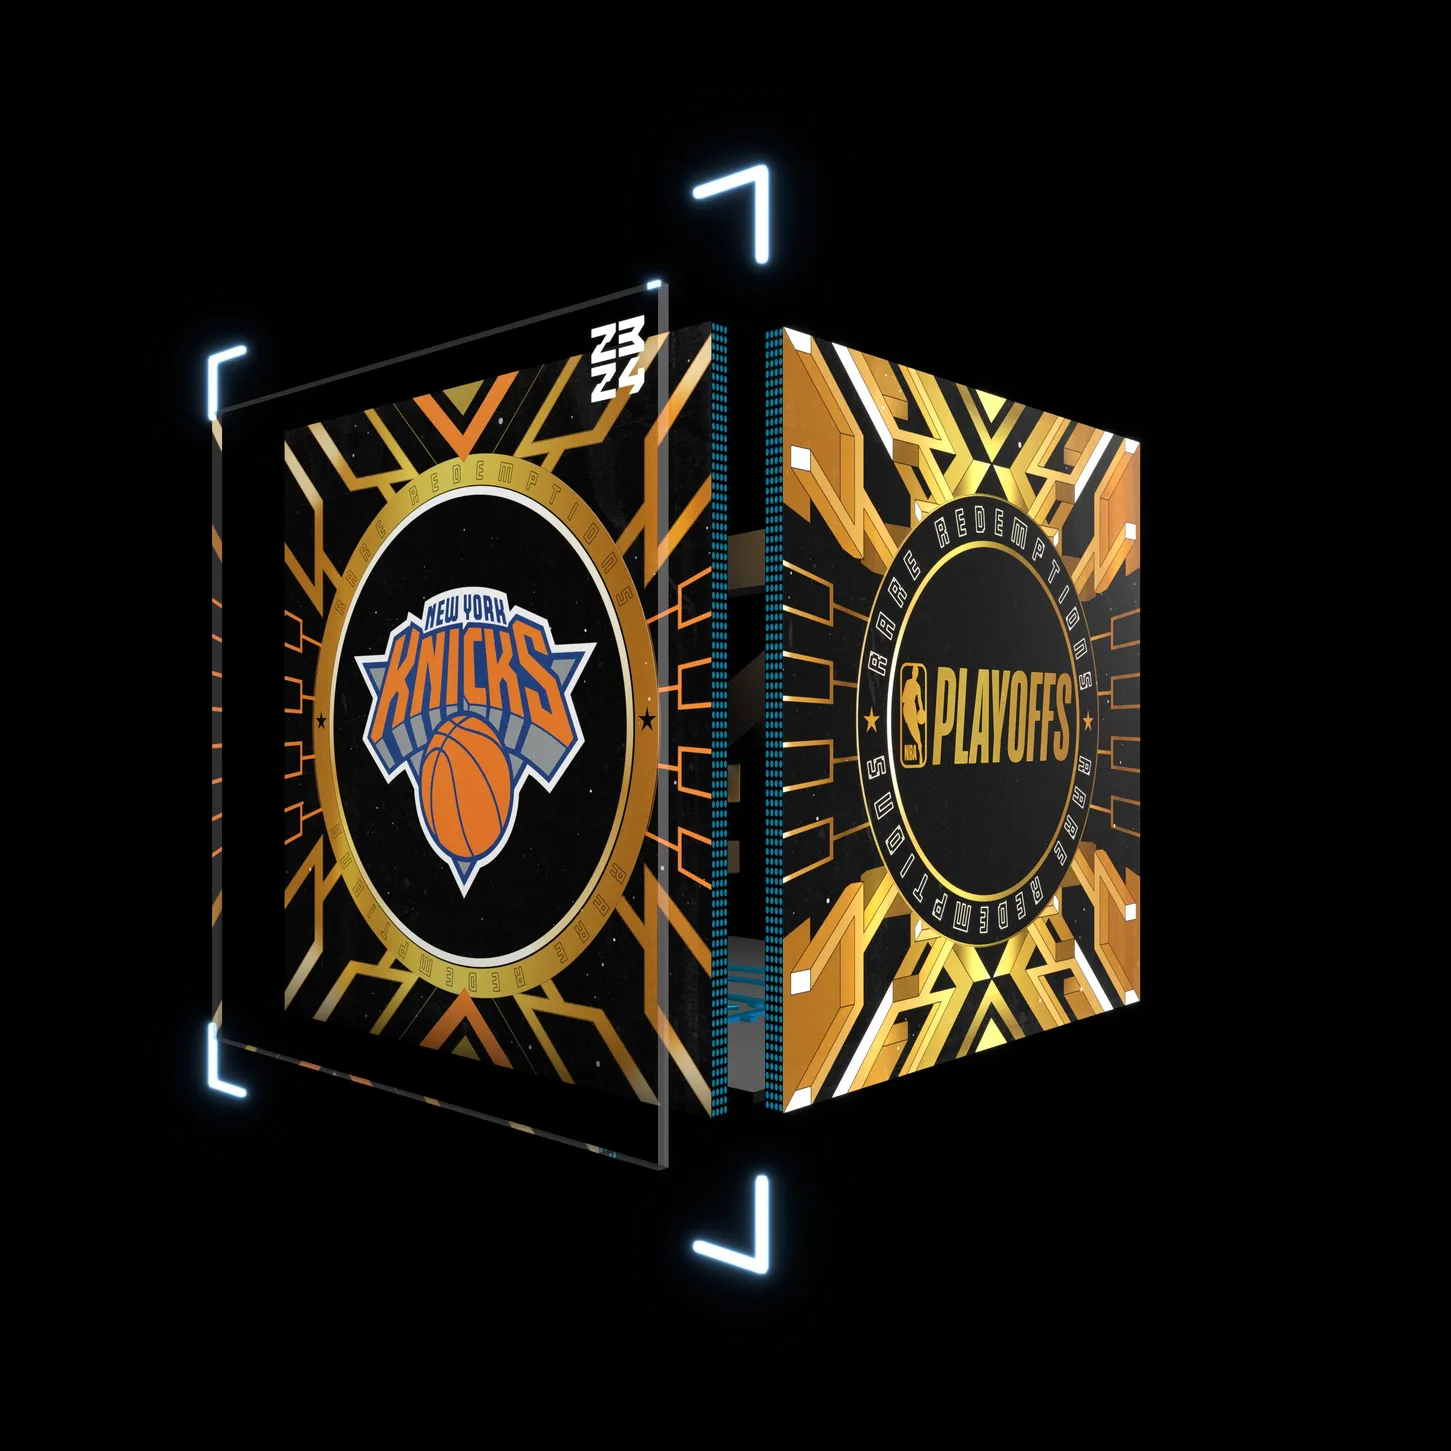 New York Knicks - Redemption asset